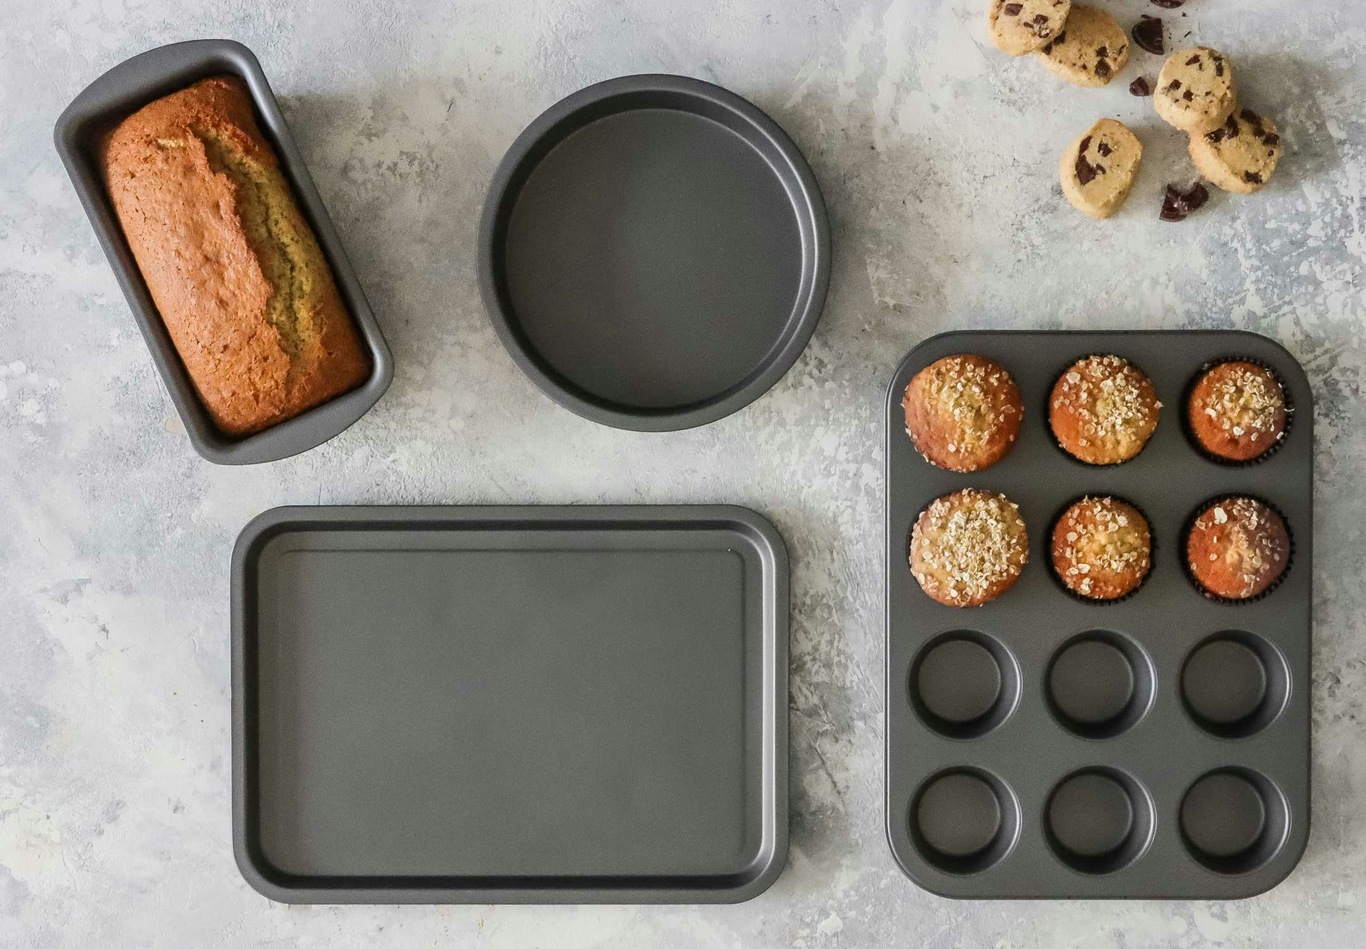 https://royaldesign.com/image/2/kitchen-craft-four-piece-bakeware-set-gift-boxed-4?w=800&quality=80